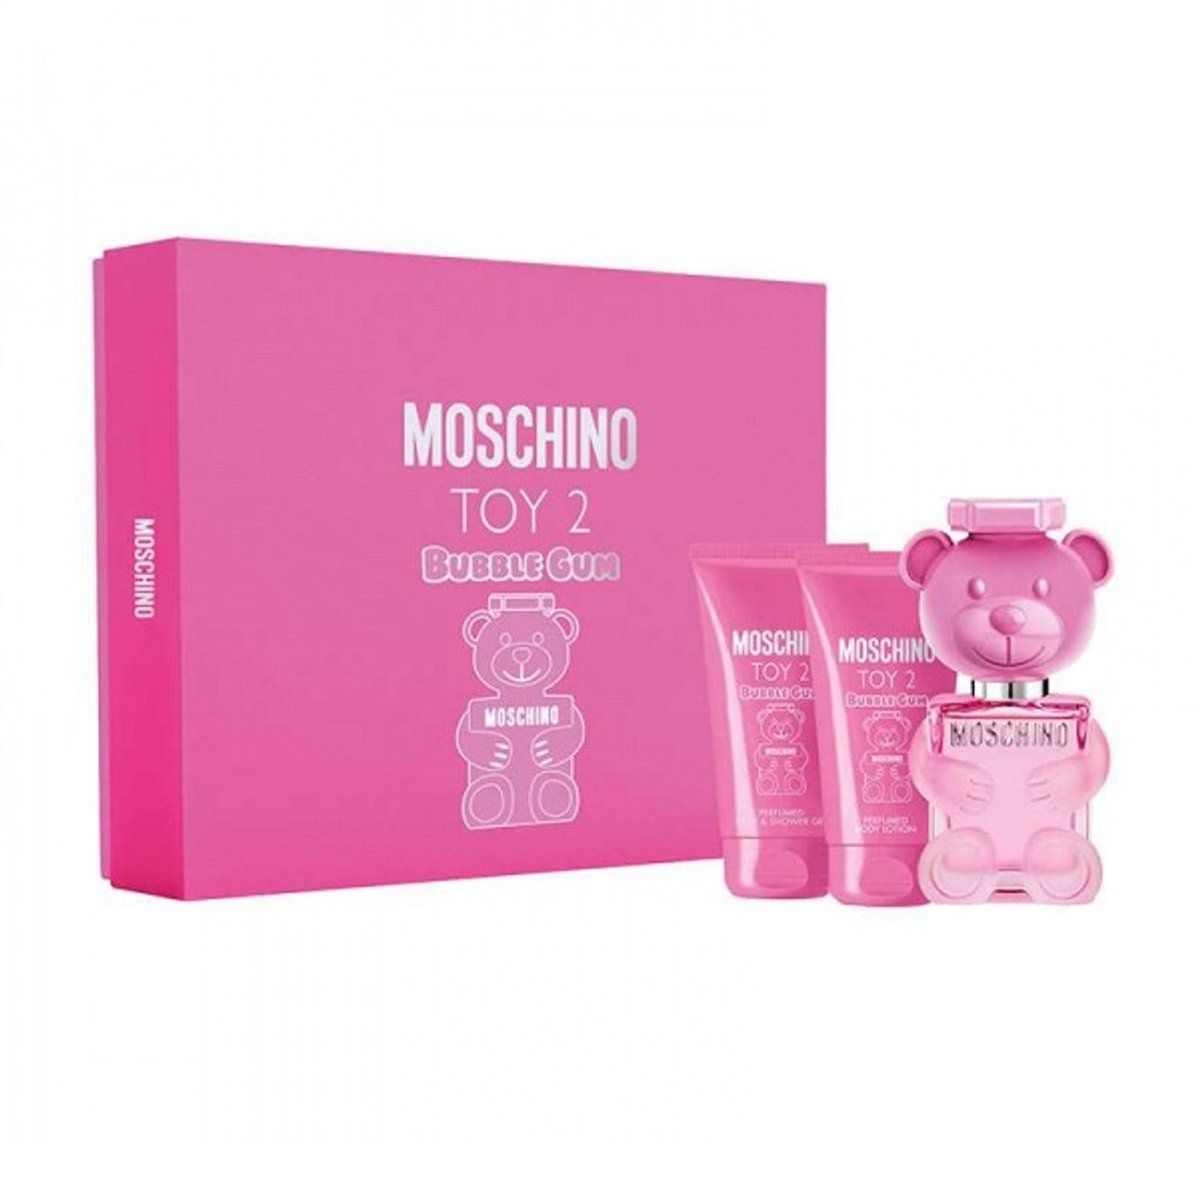  Gift Set Moschino Toy 2 Bubble Gum 3pcs ( EDT 50ml + Shower Gel 50ml + Body Lotion 50ml ) 